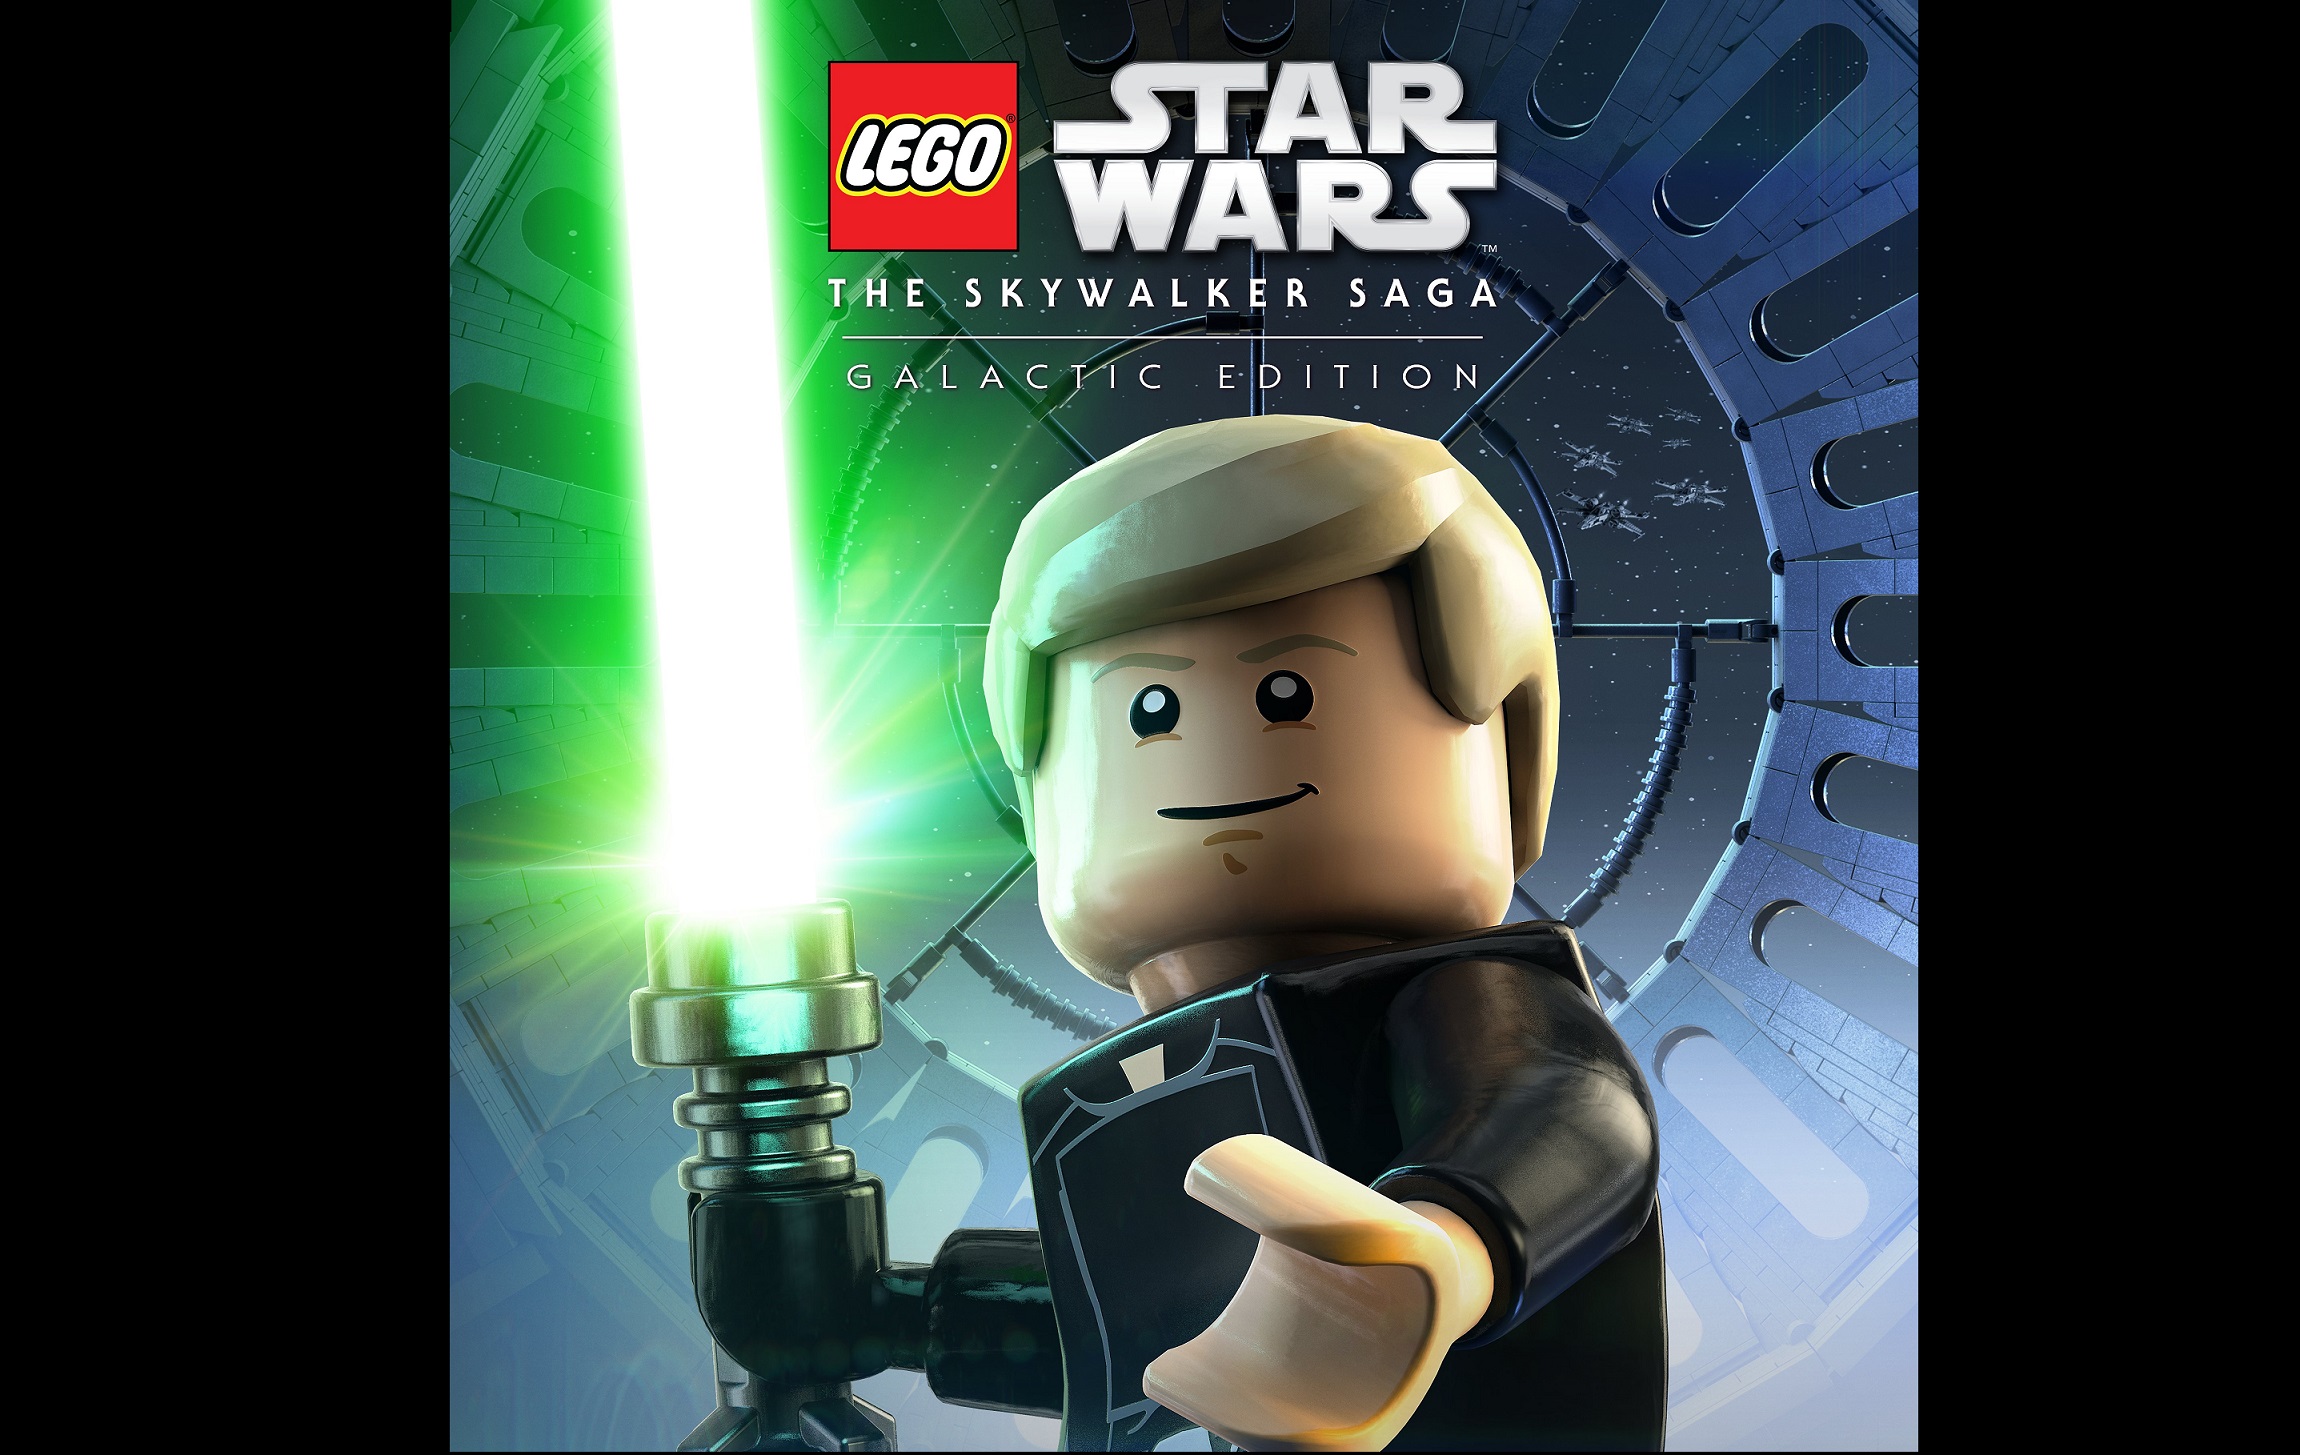 Lego Star Wars: The Skywalker Saga Galactic Edition includes 13 character packs